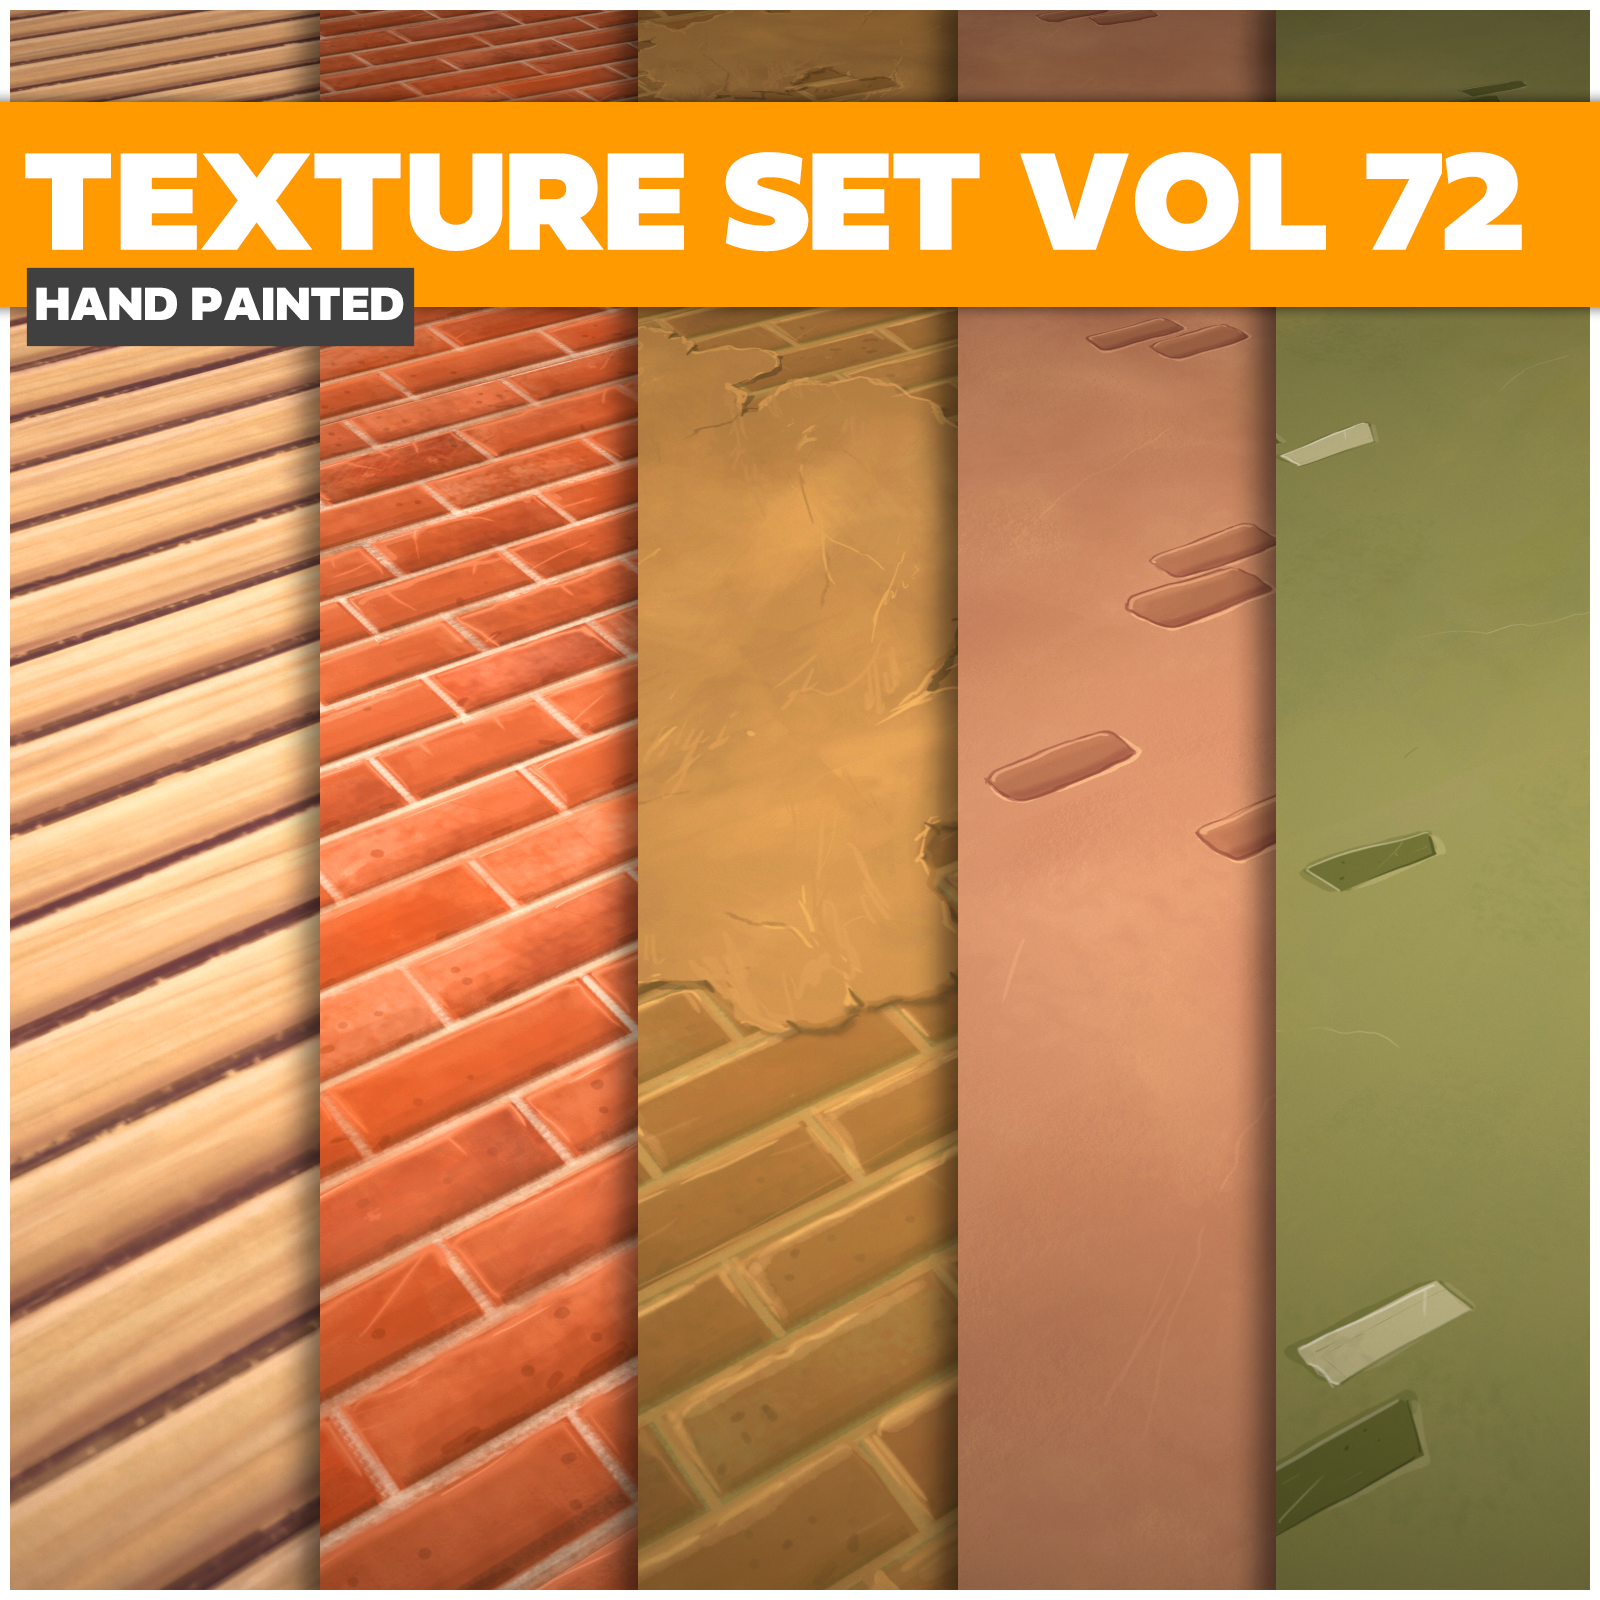 Walls Vol.72 - Game PBR Textures - LowlyPoly